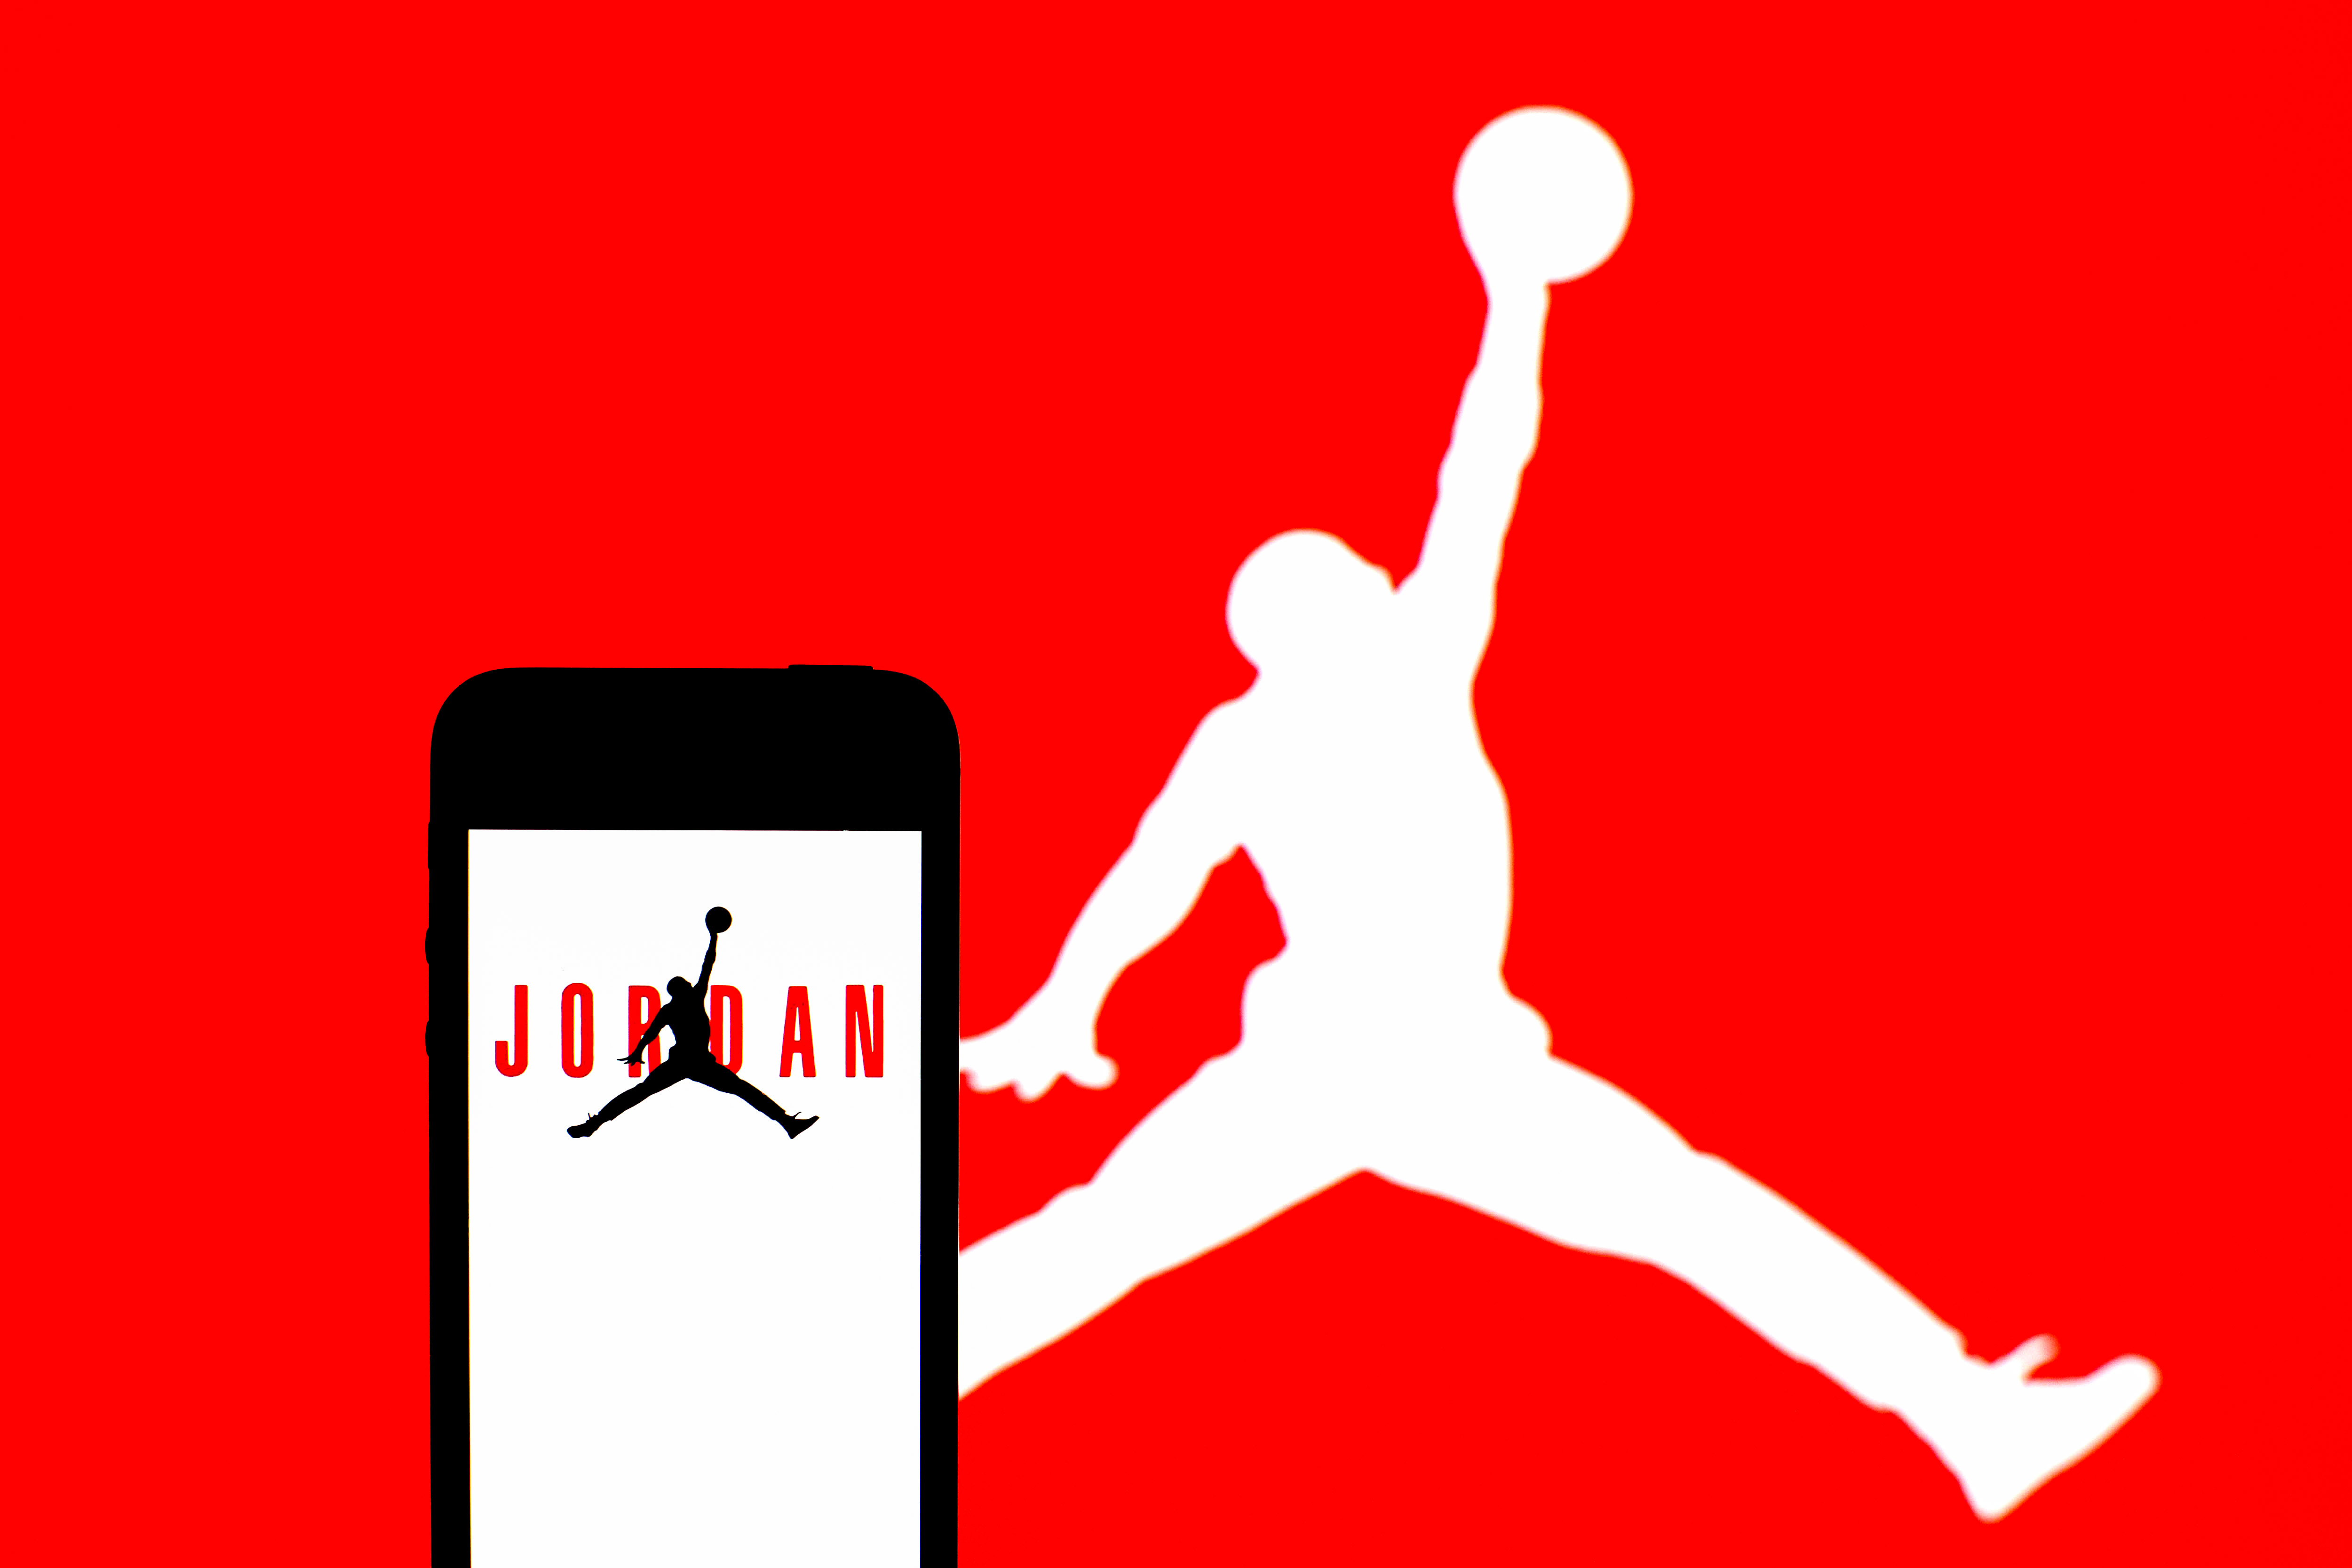 Air Jordan 1 “Satin Bred” Drops This Year: Details